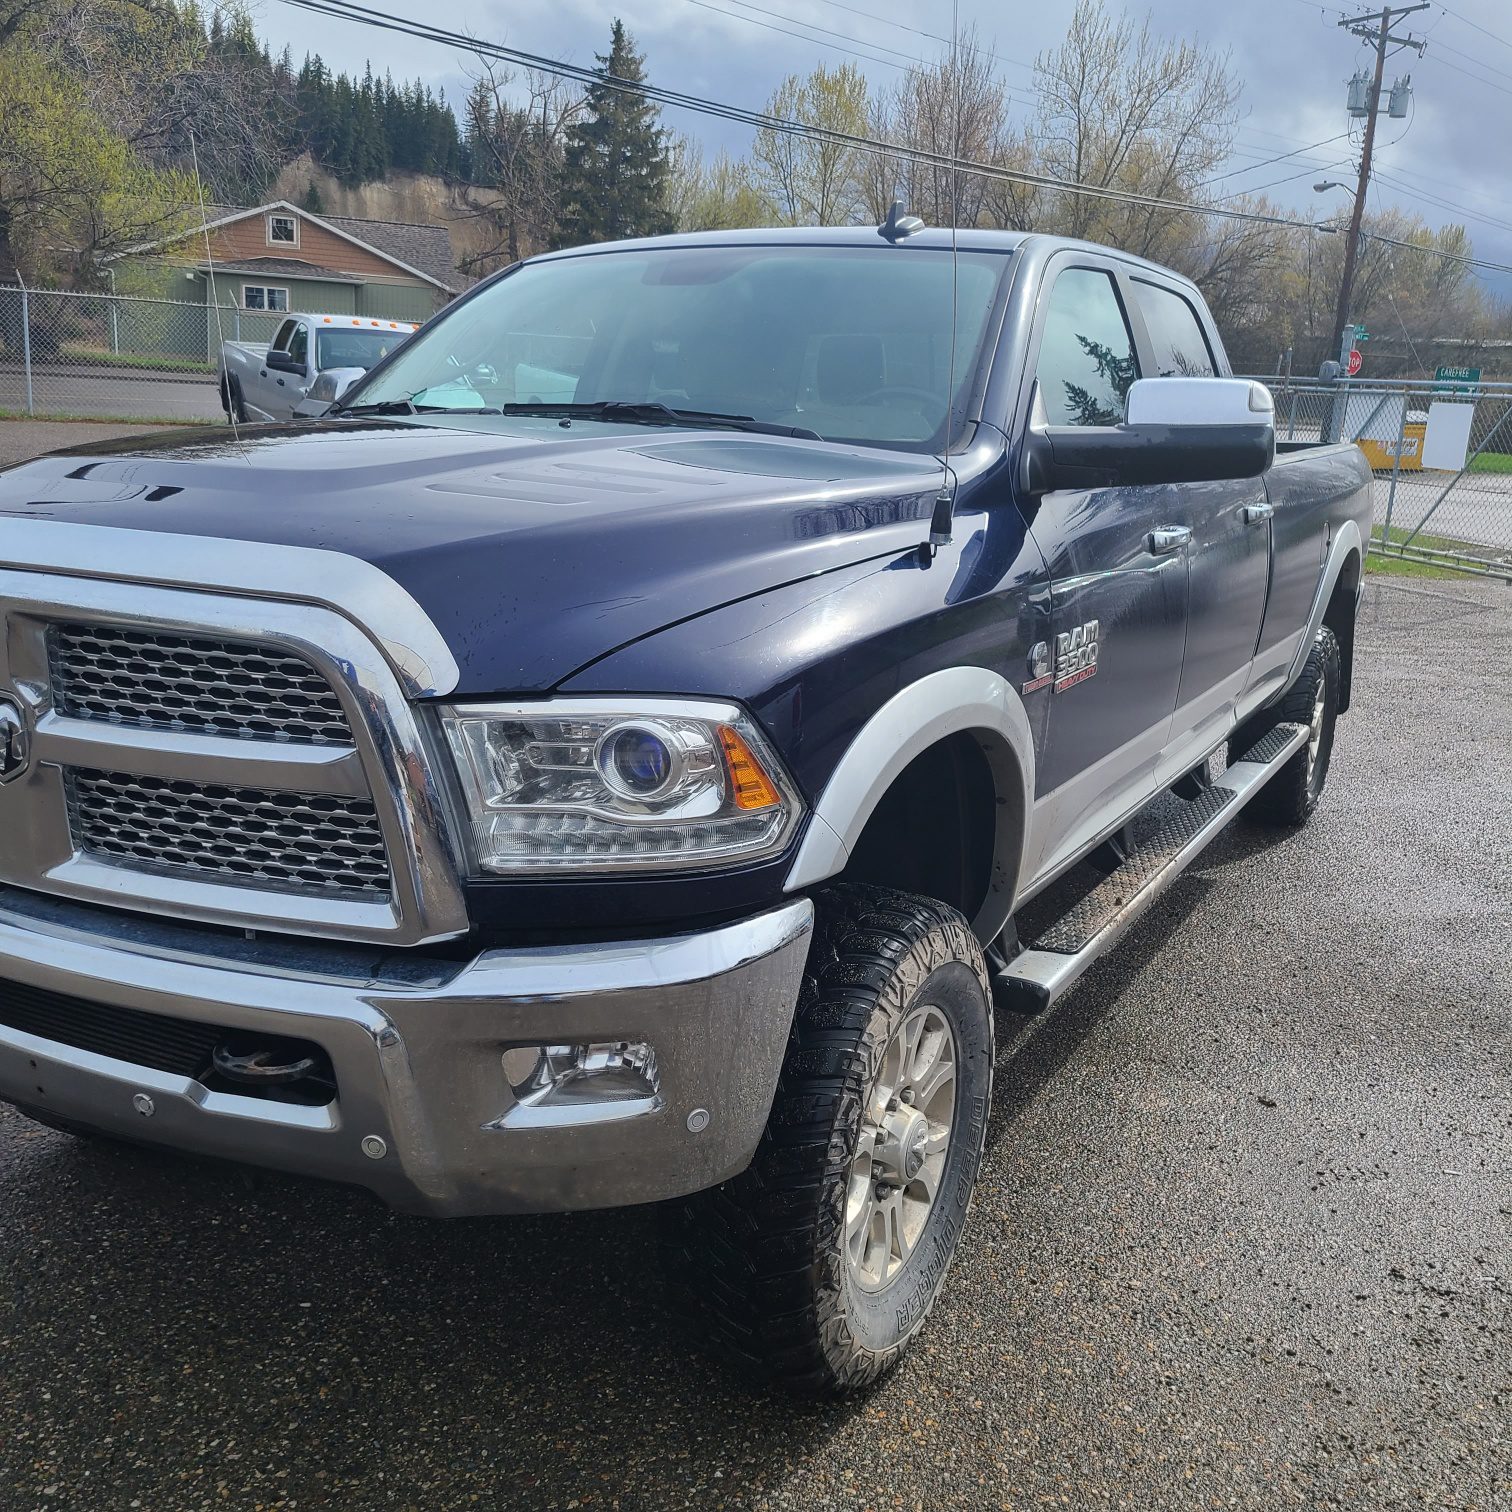 2018 Dodge Ram 3500 Laramie #B-PG-0597 Located in Prince George